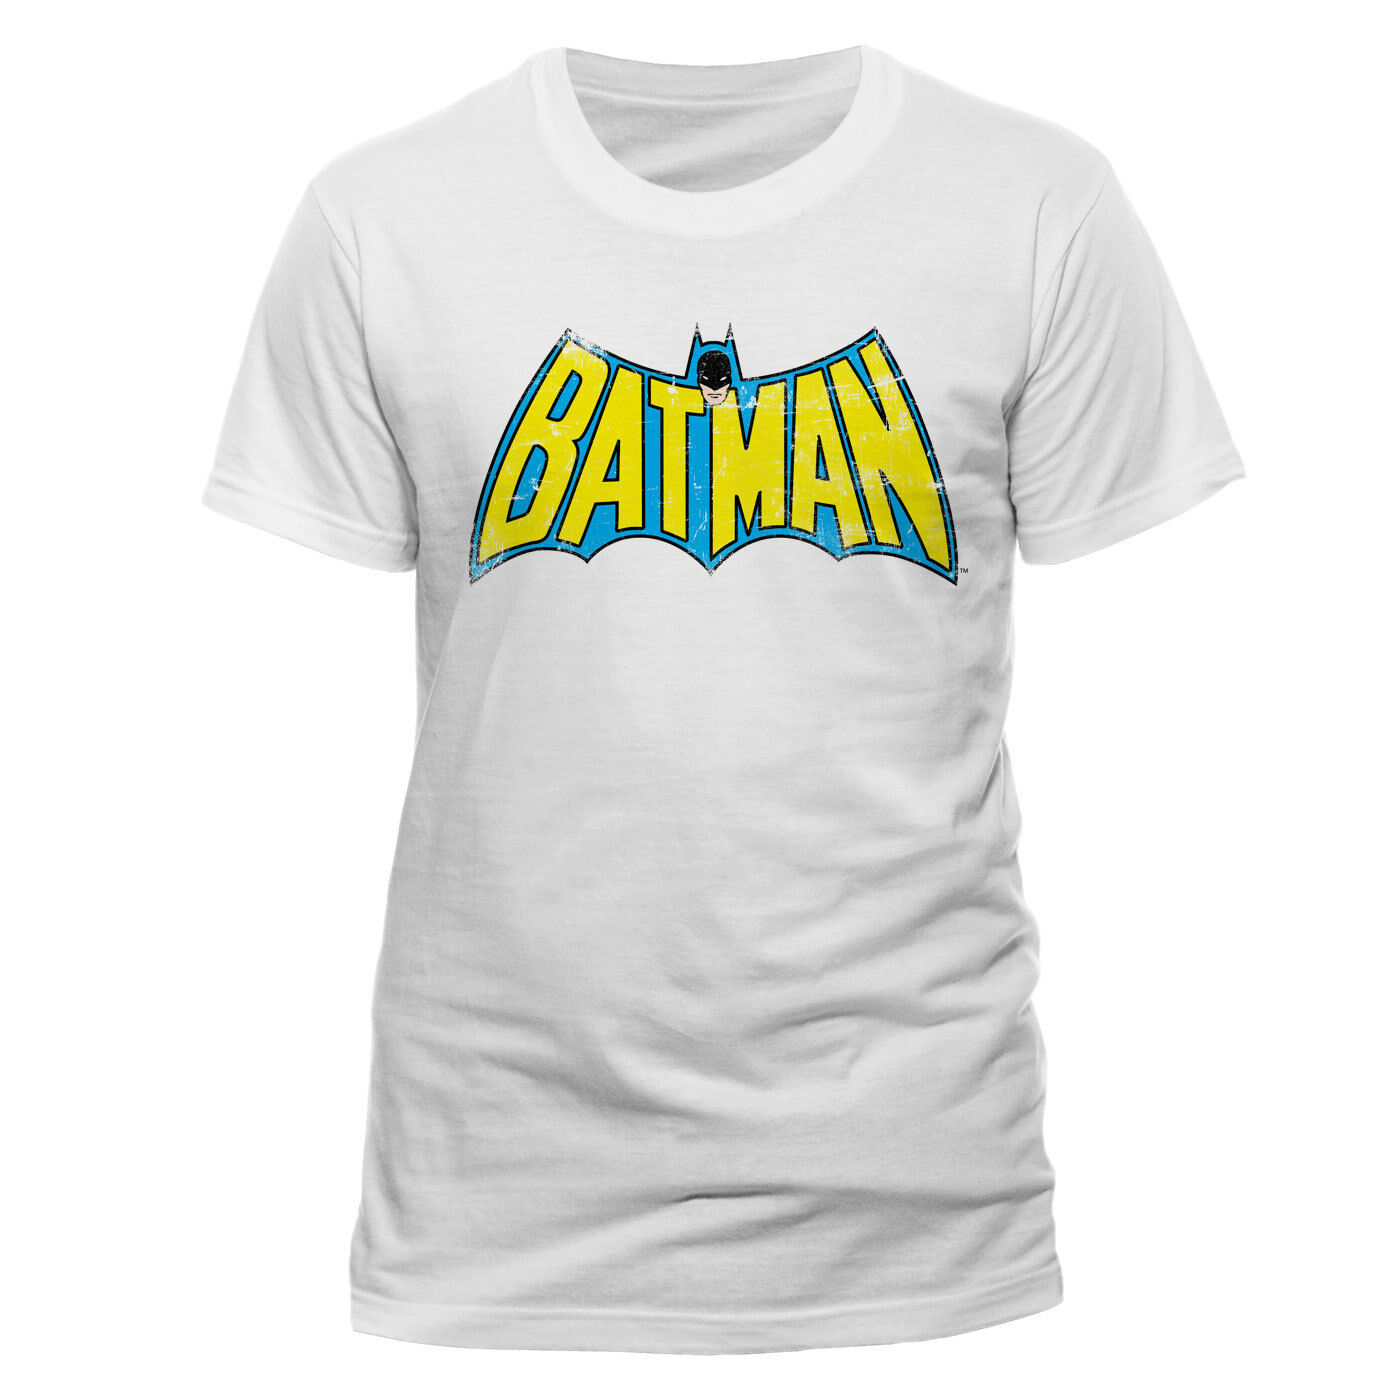 DC Comics Superhero Film Superhelden Logo T-Shirt Männer Men Freizeit  Sommer | eBay